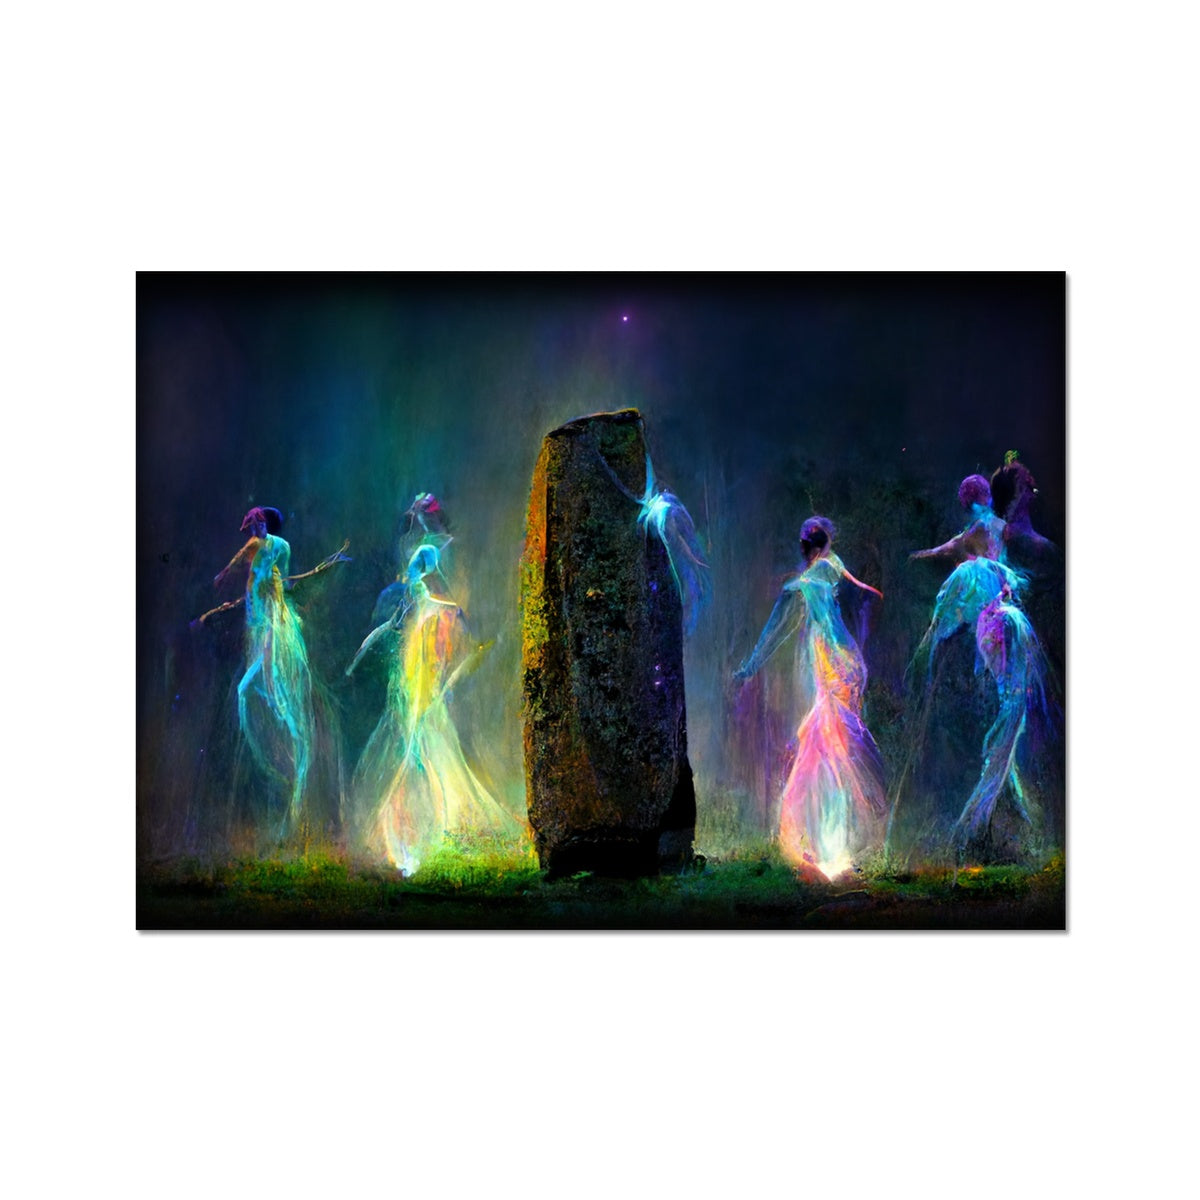 Standing Stones Fairies 9 Wall Art Poster